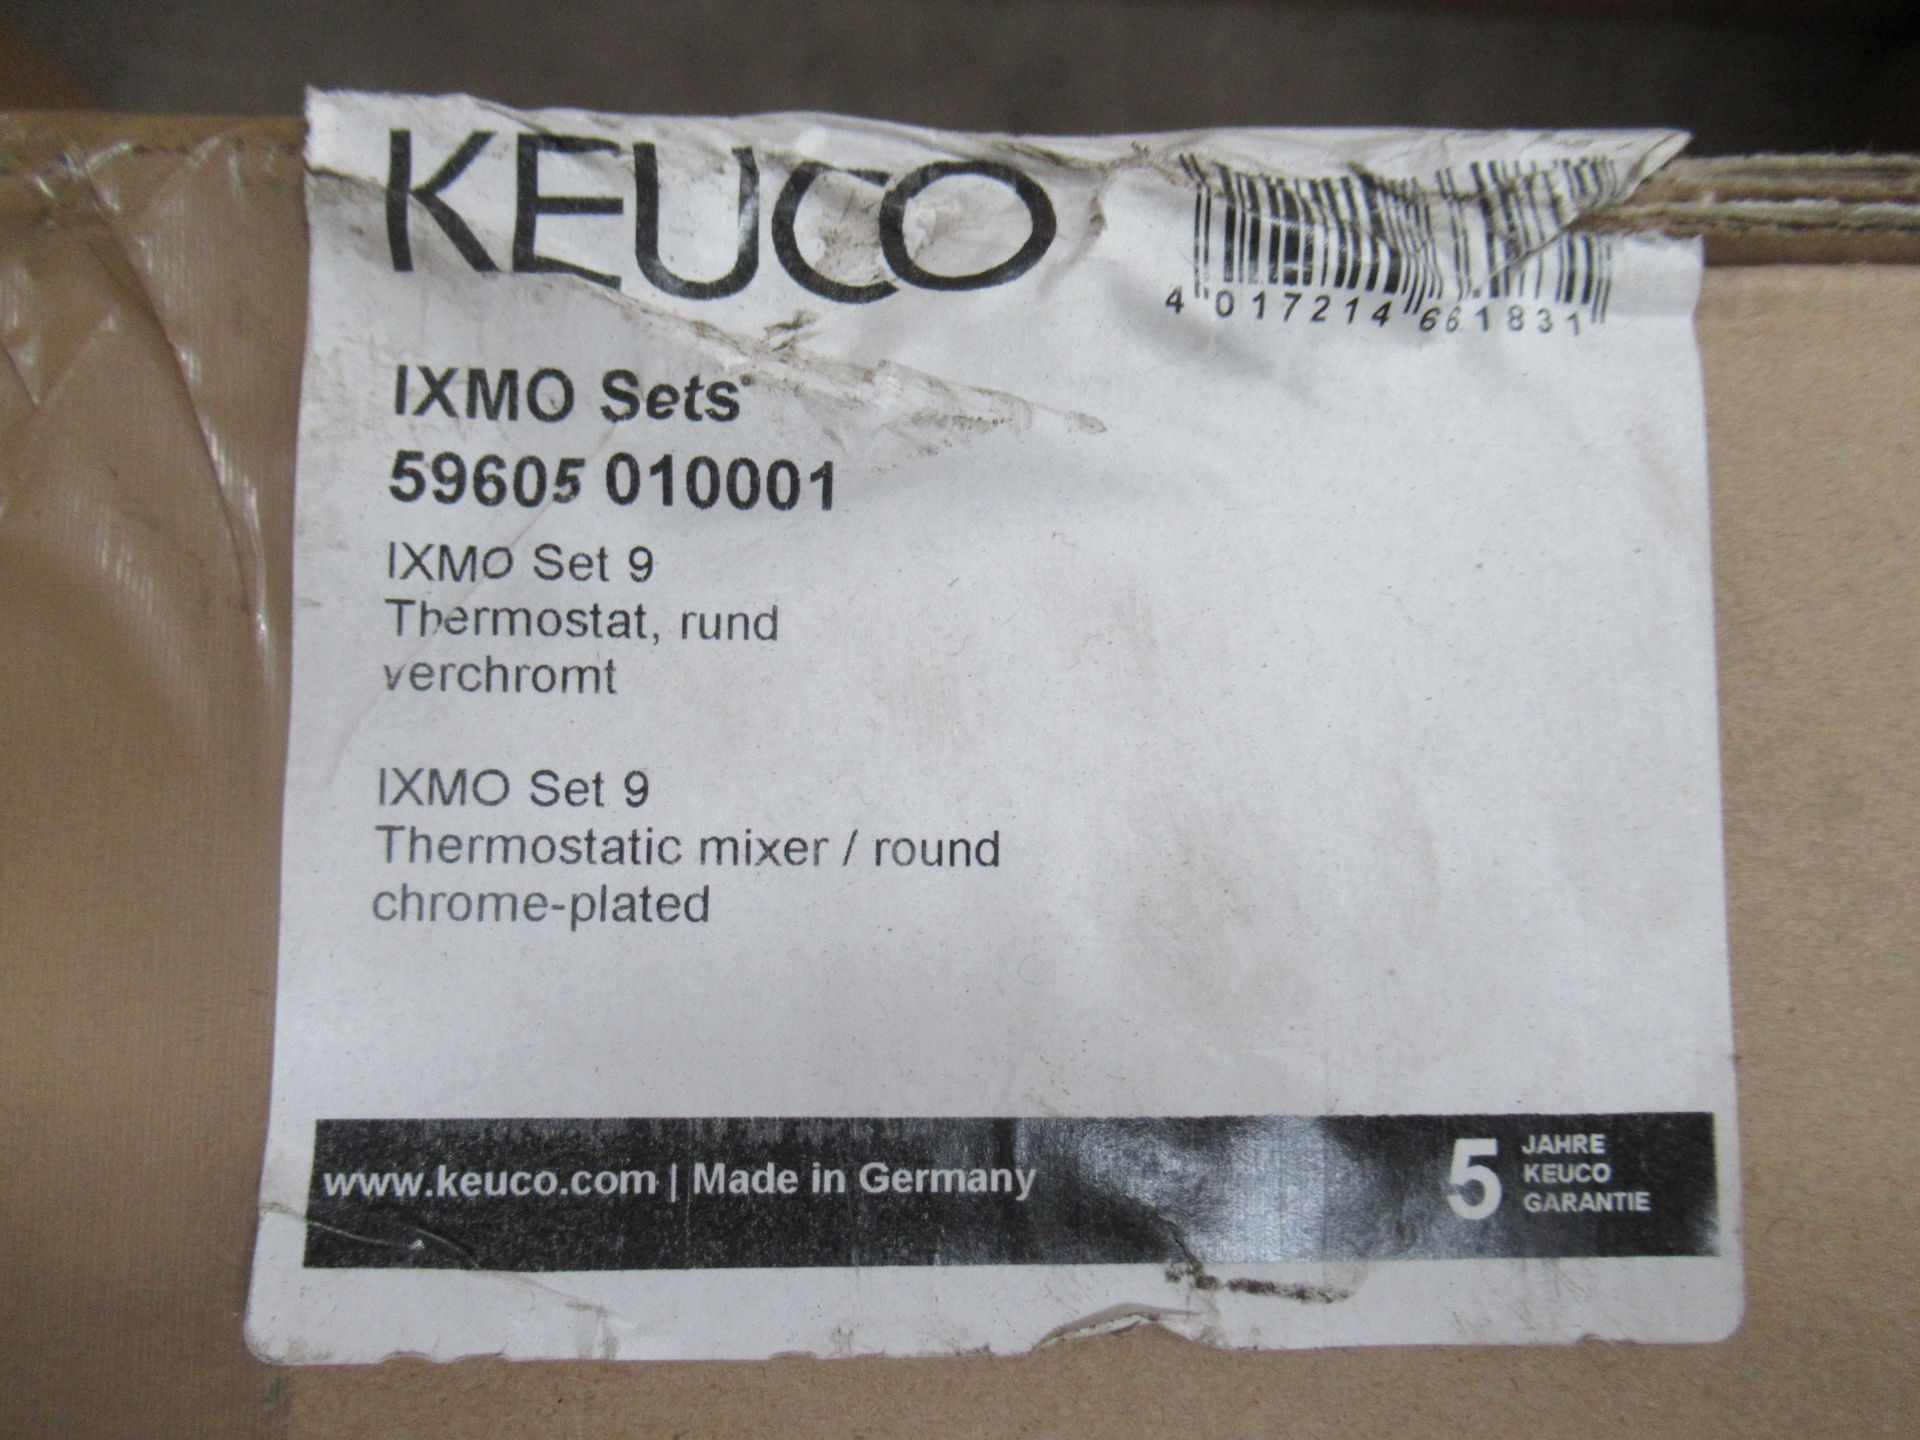 Keuco IXMO Shower Set 9. Thermostatic Mixer 2Ways with Round Rosettes (Chrome Plated) - Image 2 of 3